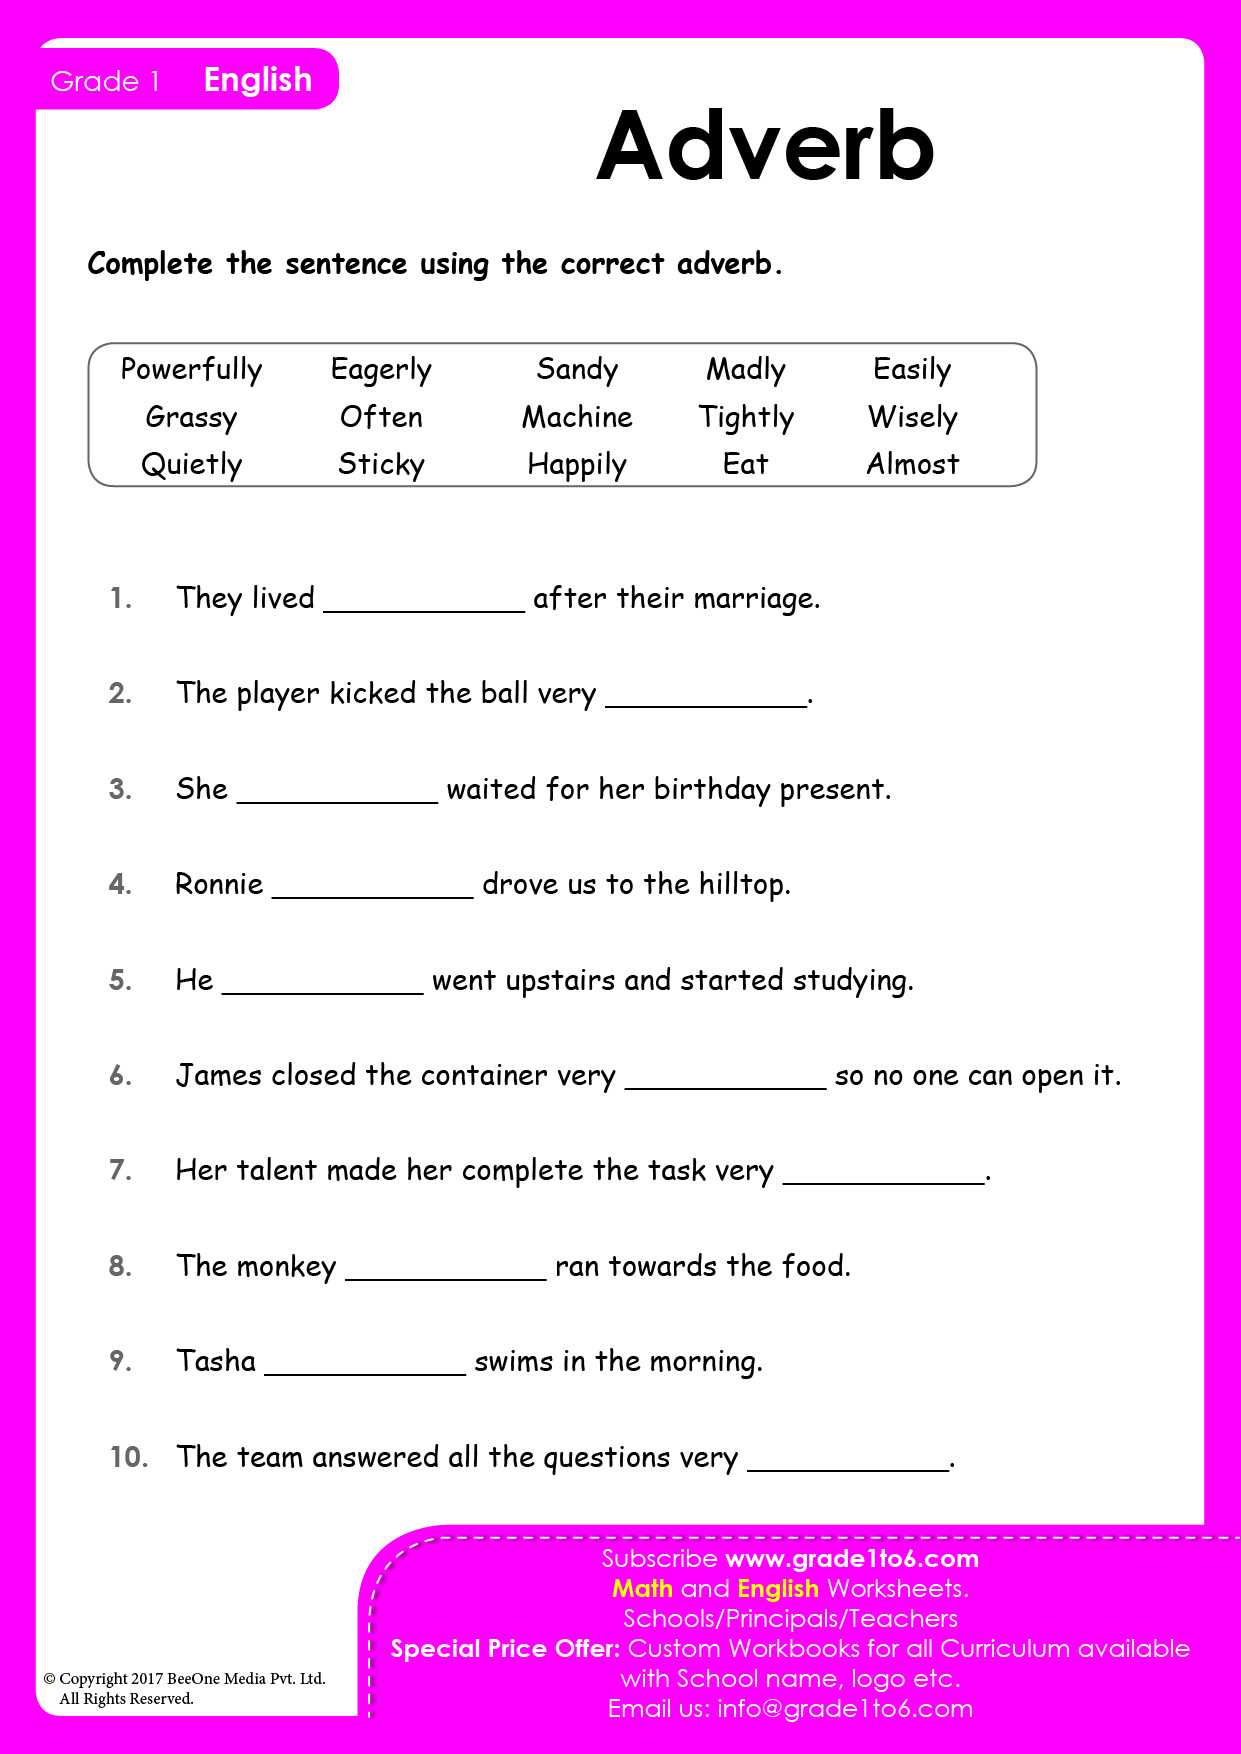 adverb-worksheets-grade-1-grade1to6